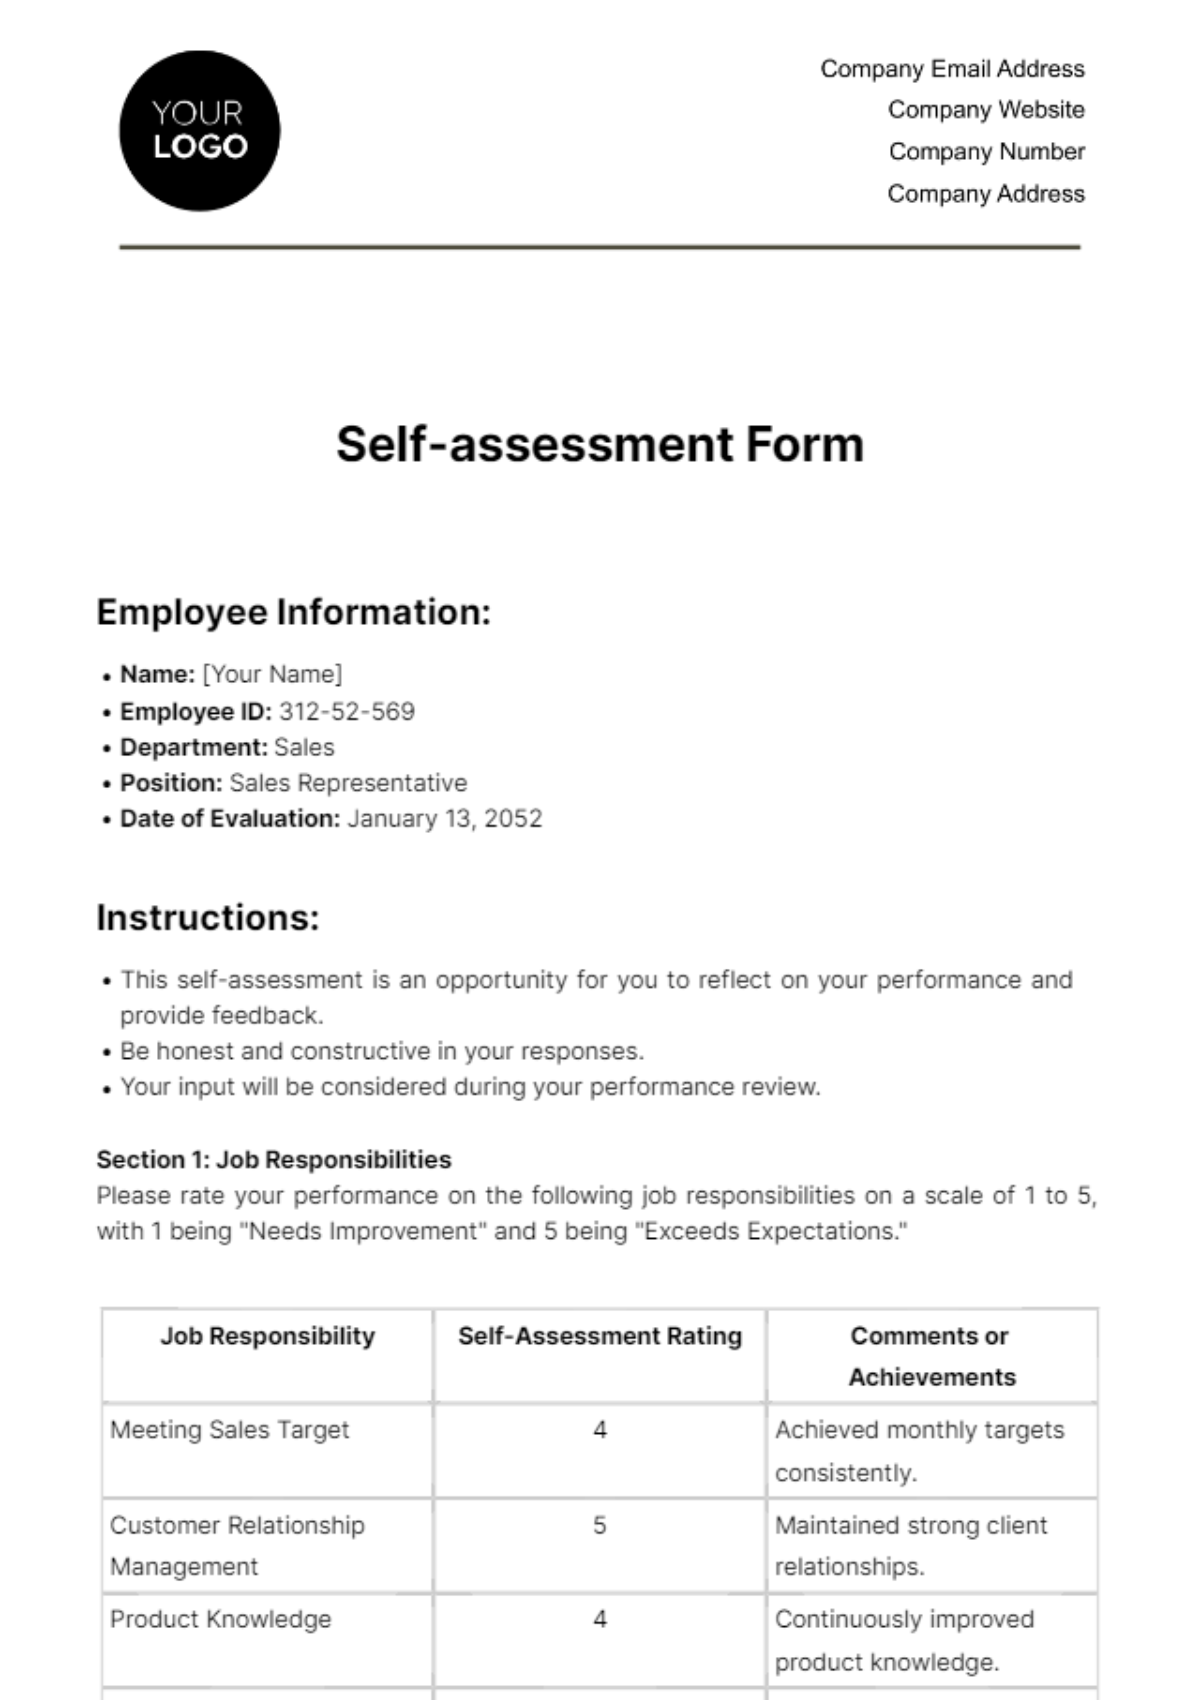 Self-assessment Form HR Template